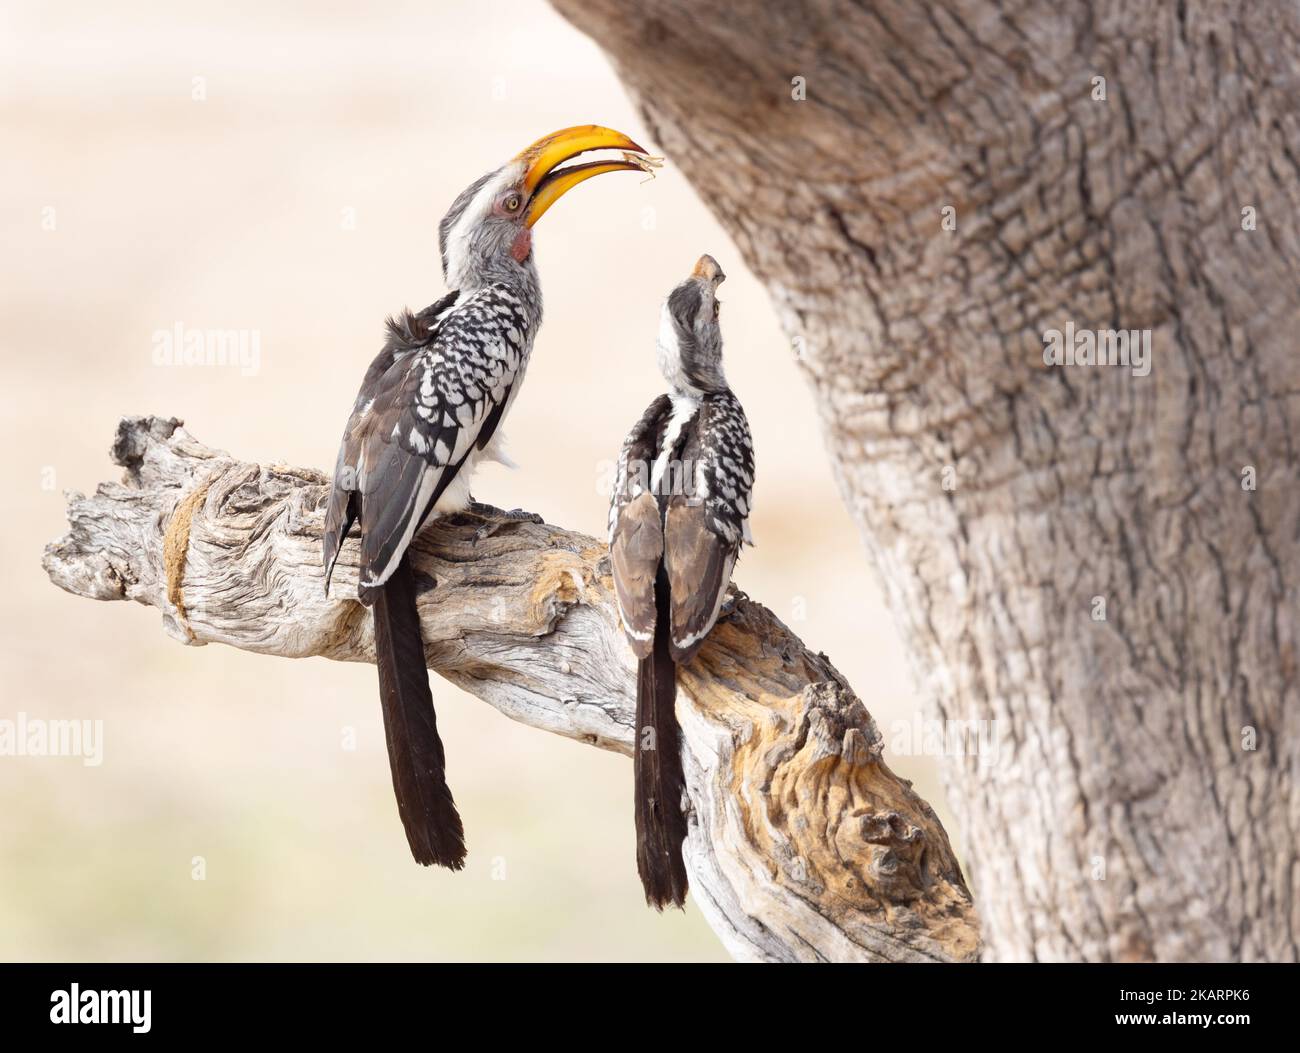 Southern Yellow Billed Hornbill, Tockus leucomelas; Stock Photo